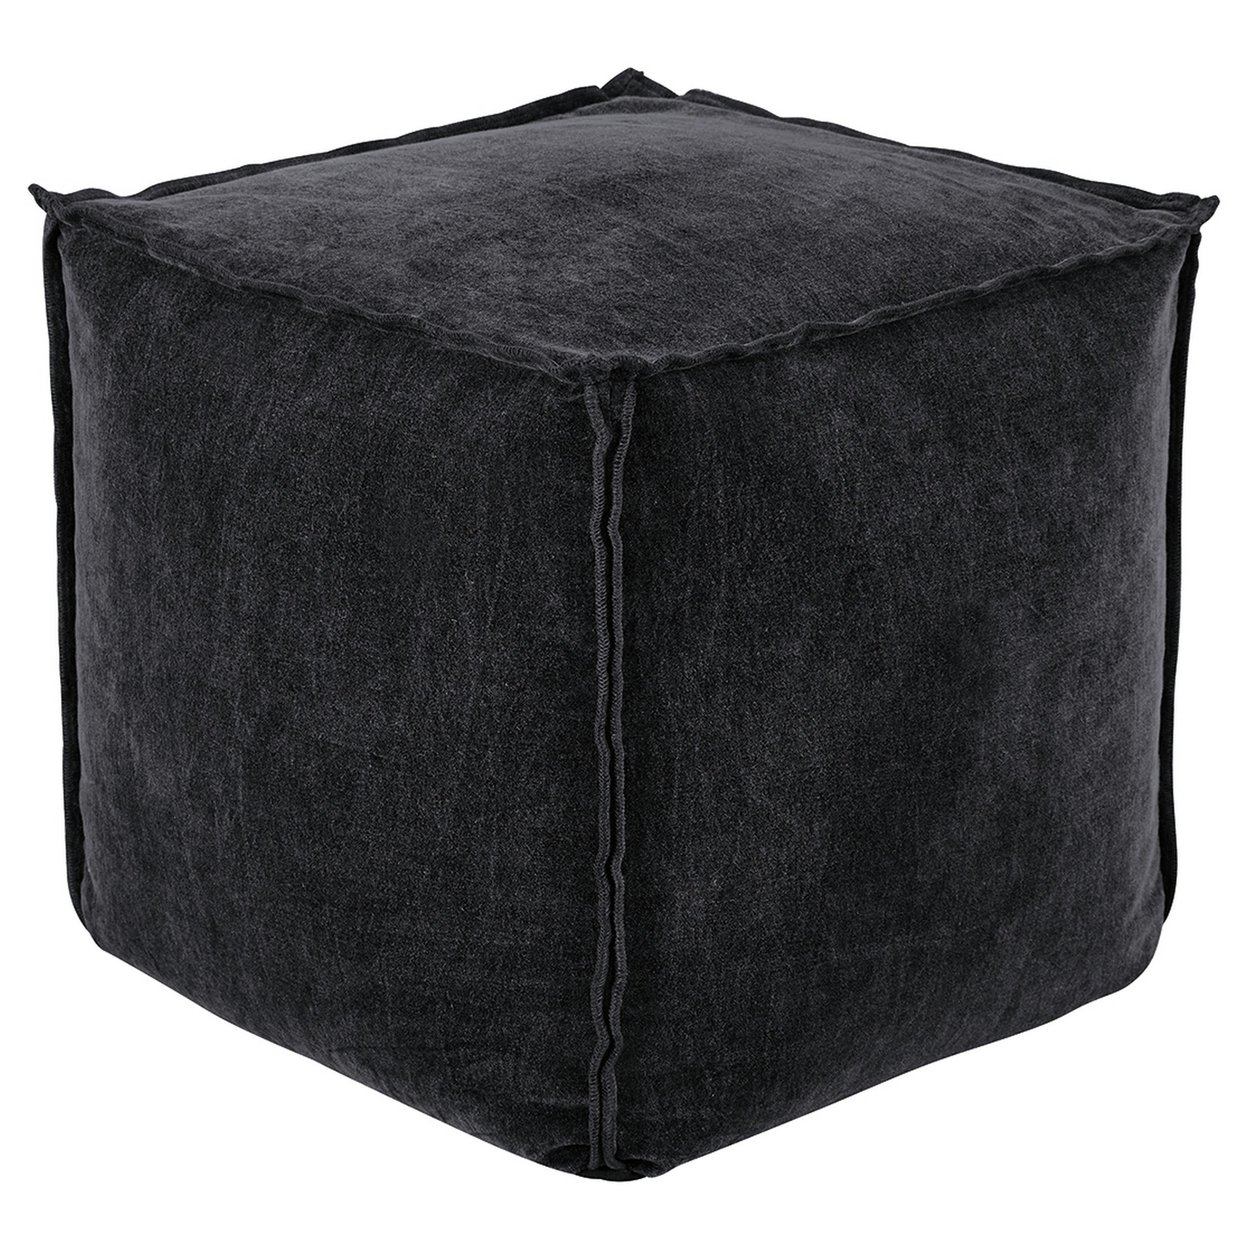 Cube Pouf With Cotton Velvet Cover, Black- Saltoro Sherpi